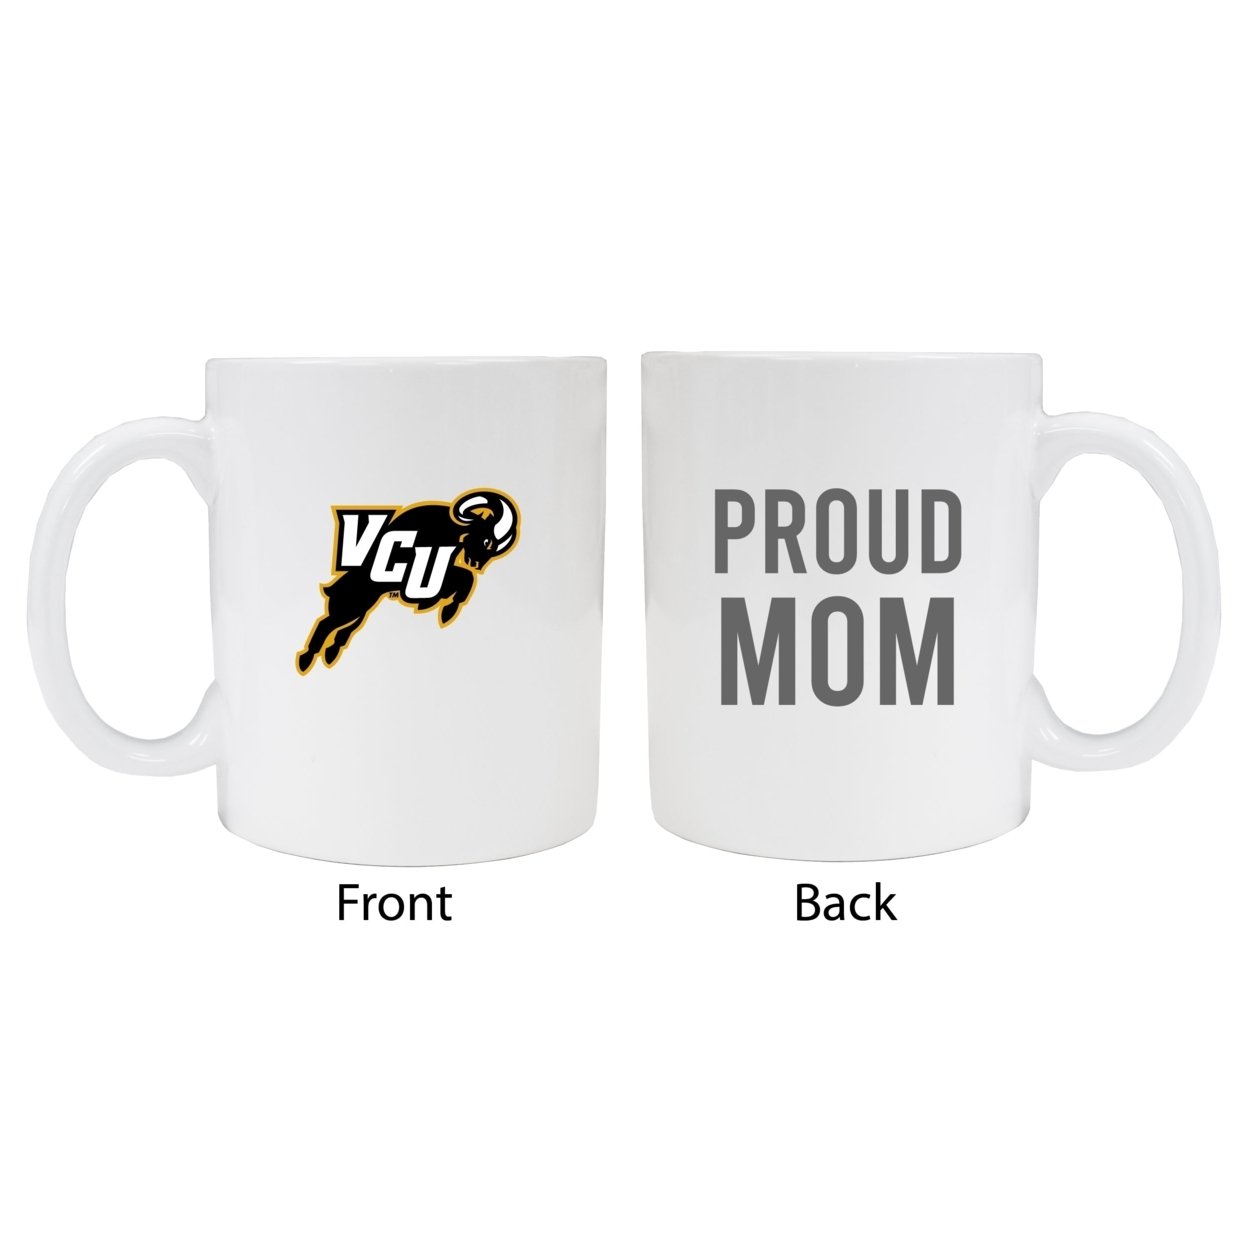 Virginia Commonwealth Proud Mom Ceramic Coffee Mug - White (2 Pack)